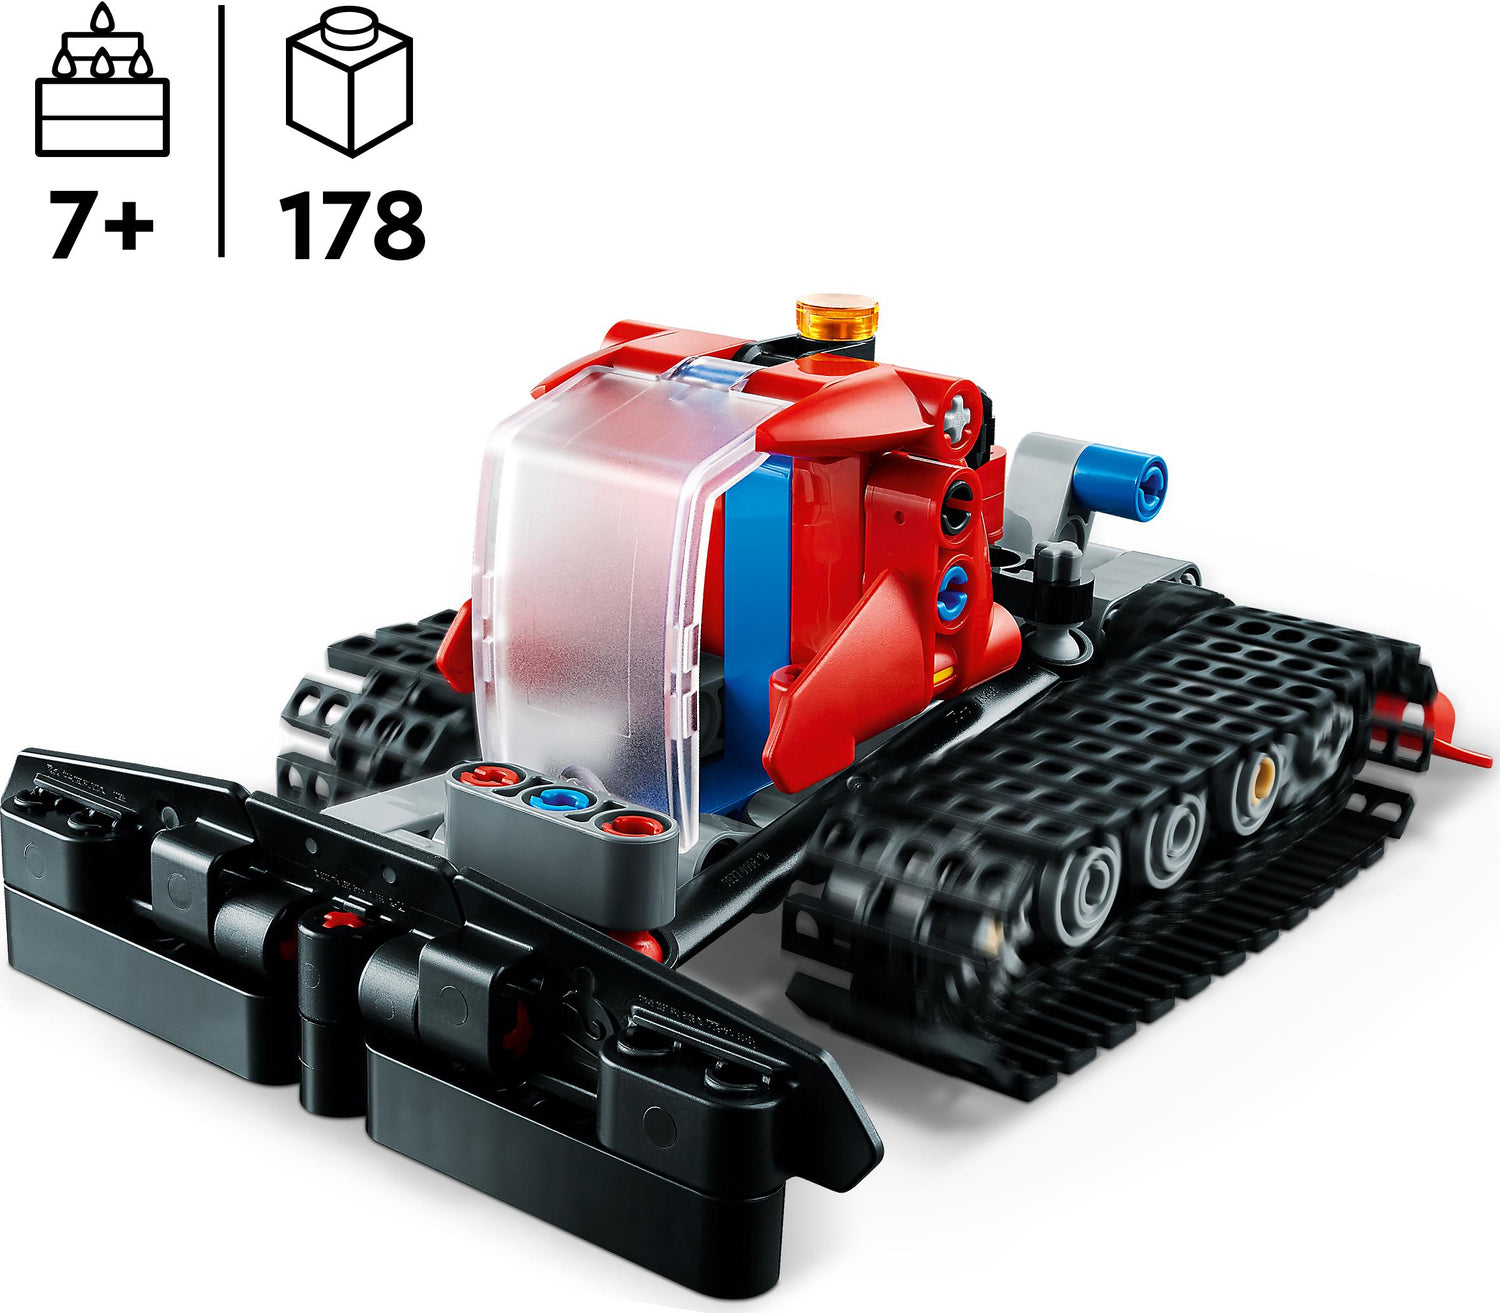 LEGO® Technic: Snow Groomer